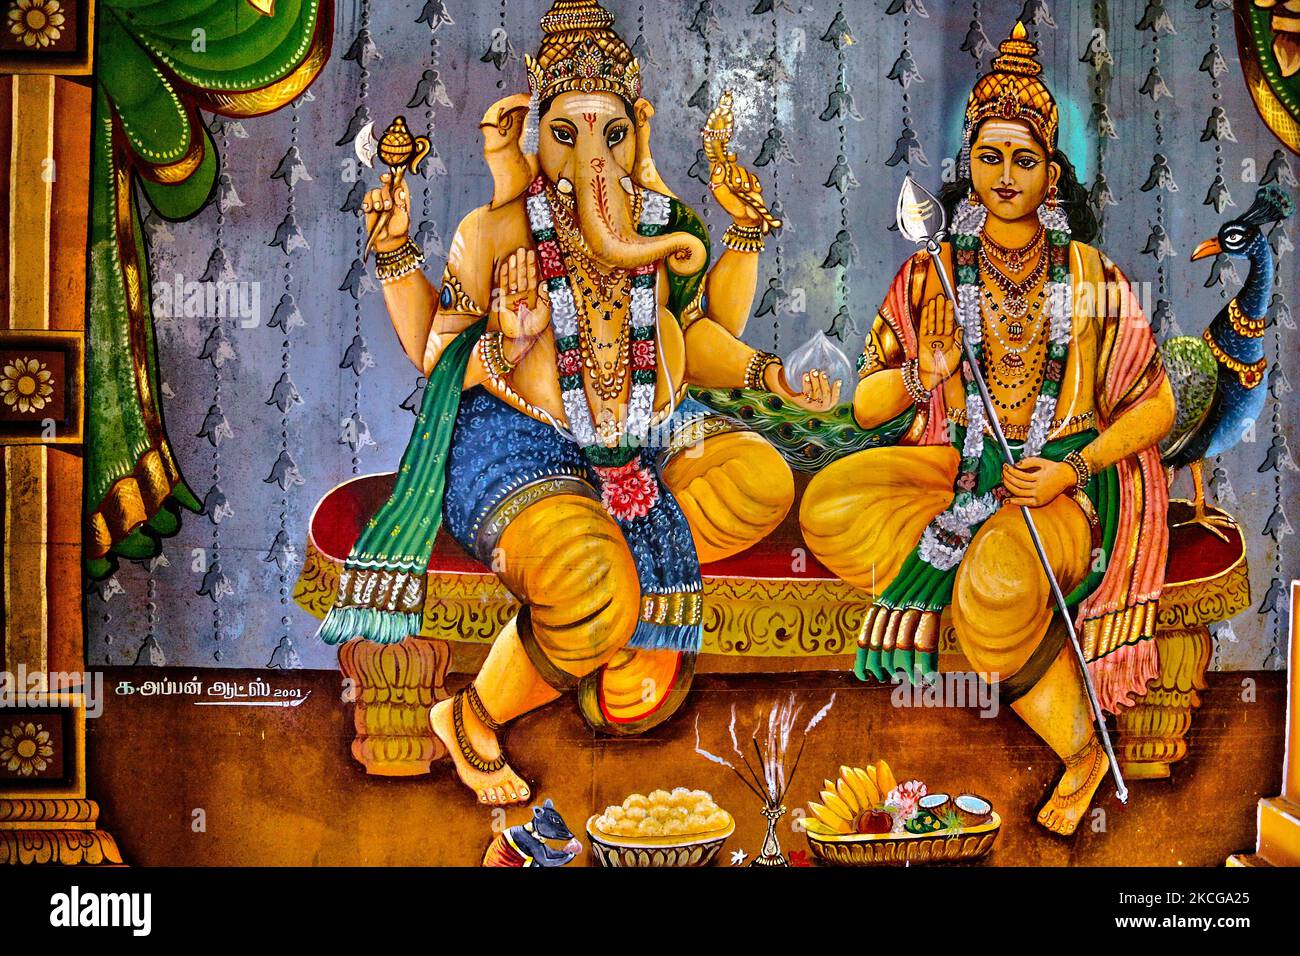 Ganesh ganesha gopuram gopura hi-res stock photography and images ...